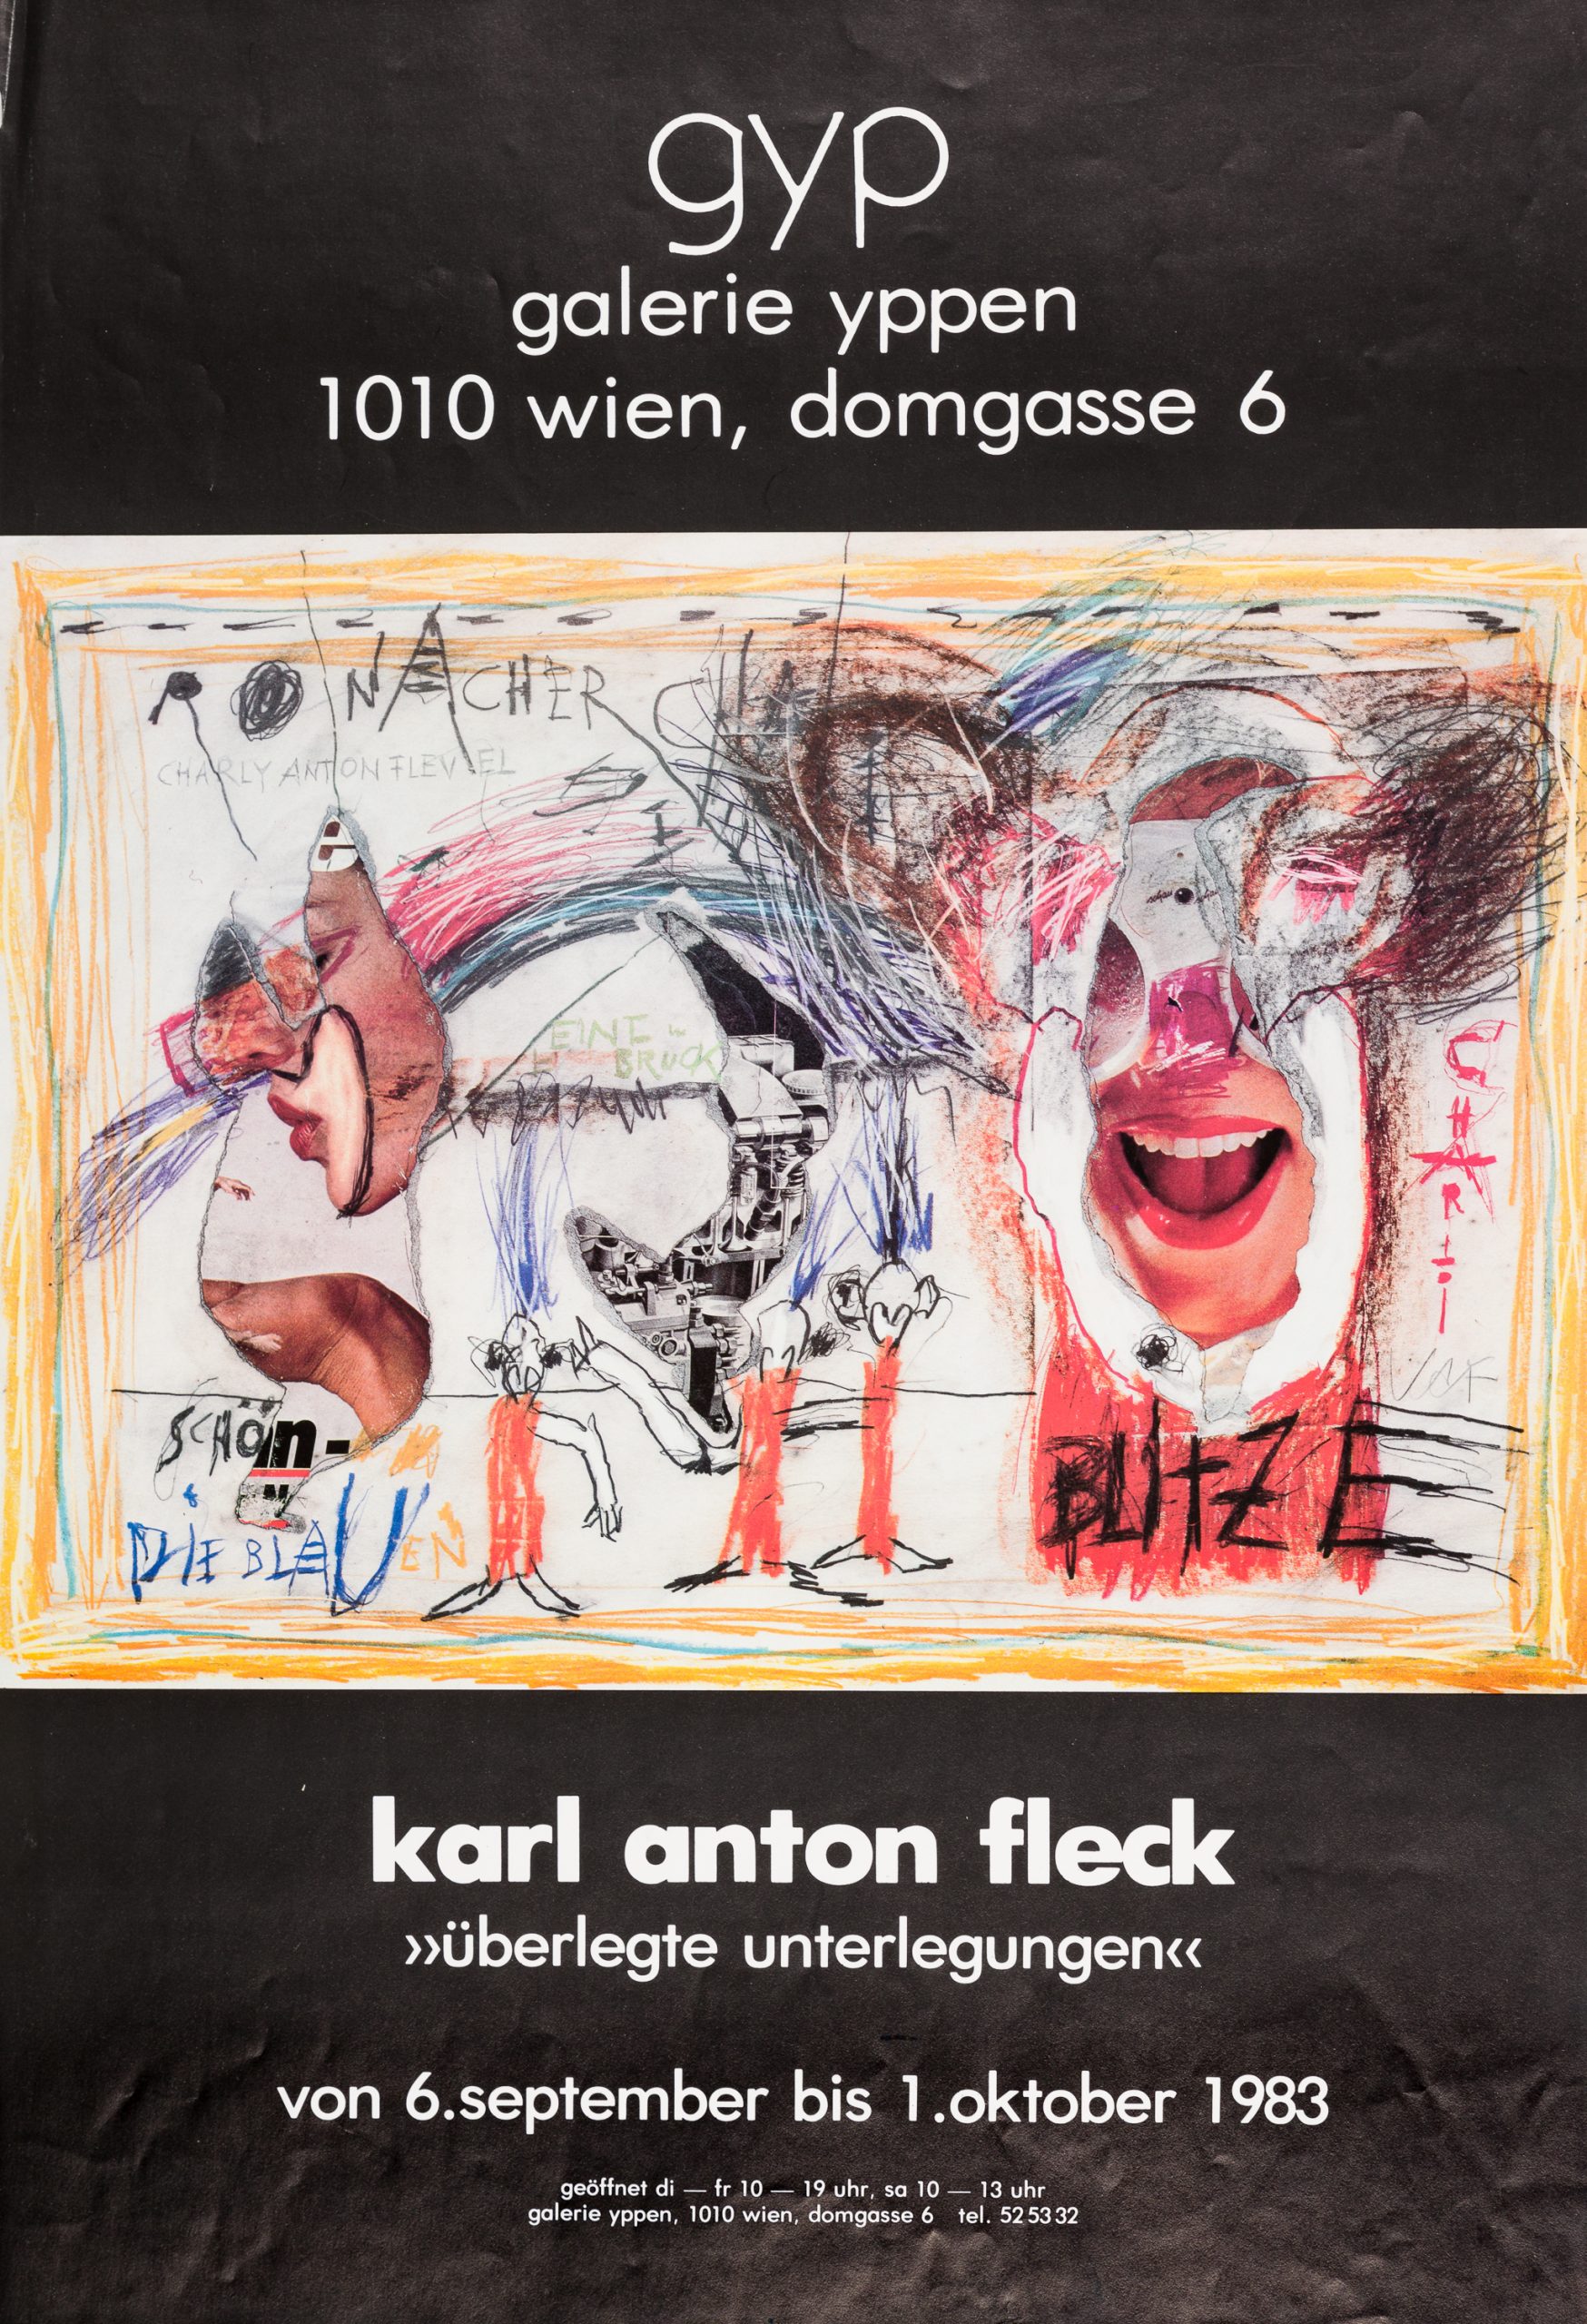 Karl Anton Fleck-Mixed lot: postcard, 1981 / exhibition invitation of the Galerie auf der Stubenbastei, 1973 / woodcut, 1966 / exhibition poster of the Galerie Yppen, 1983